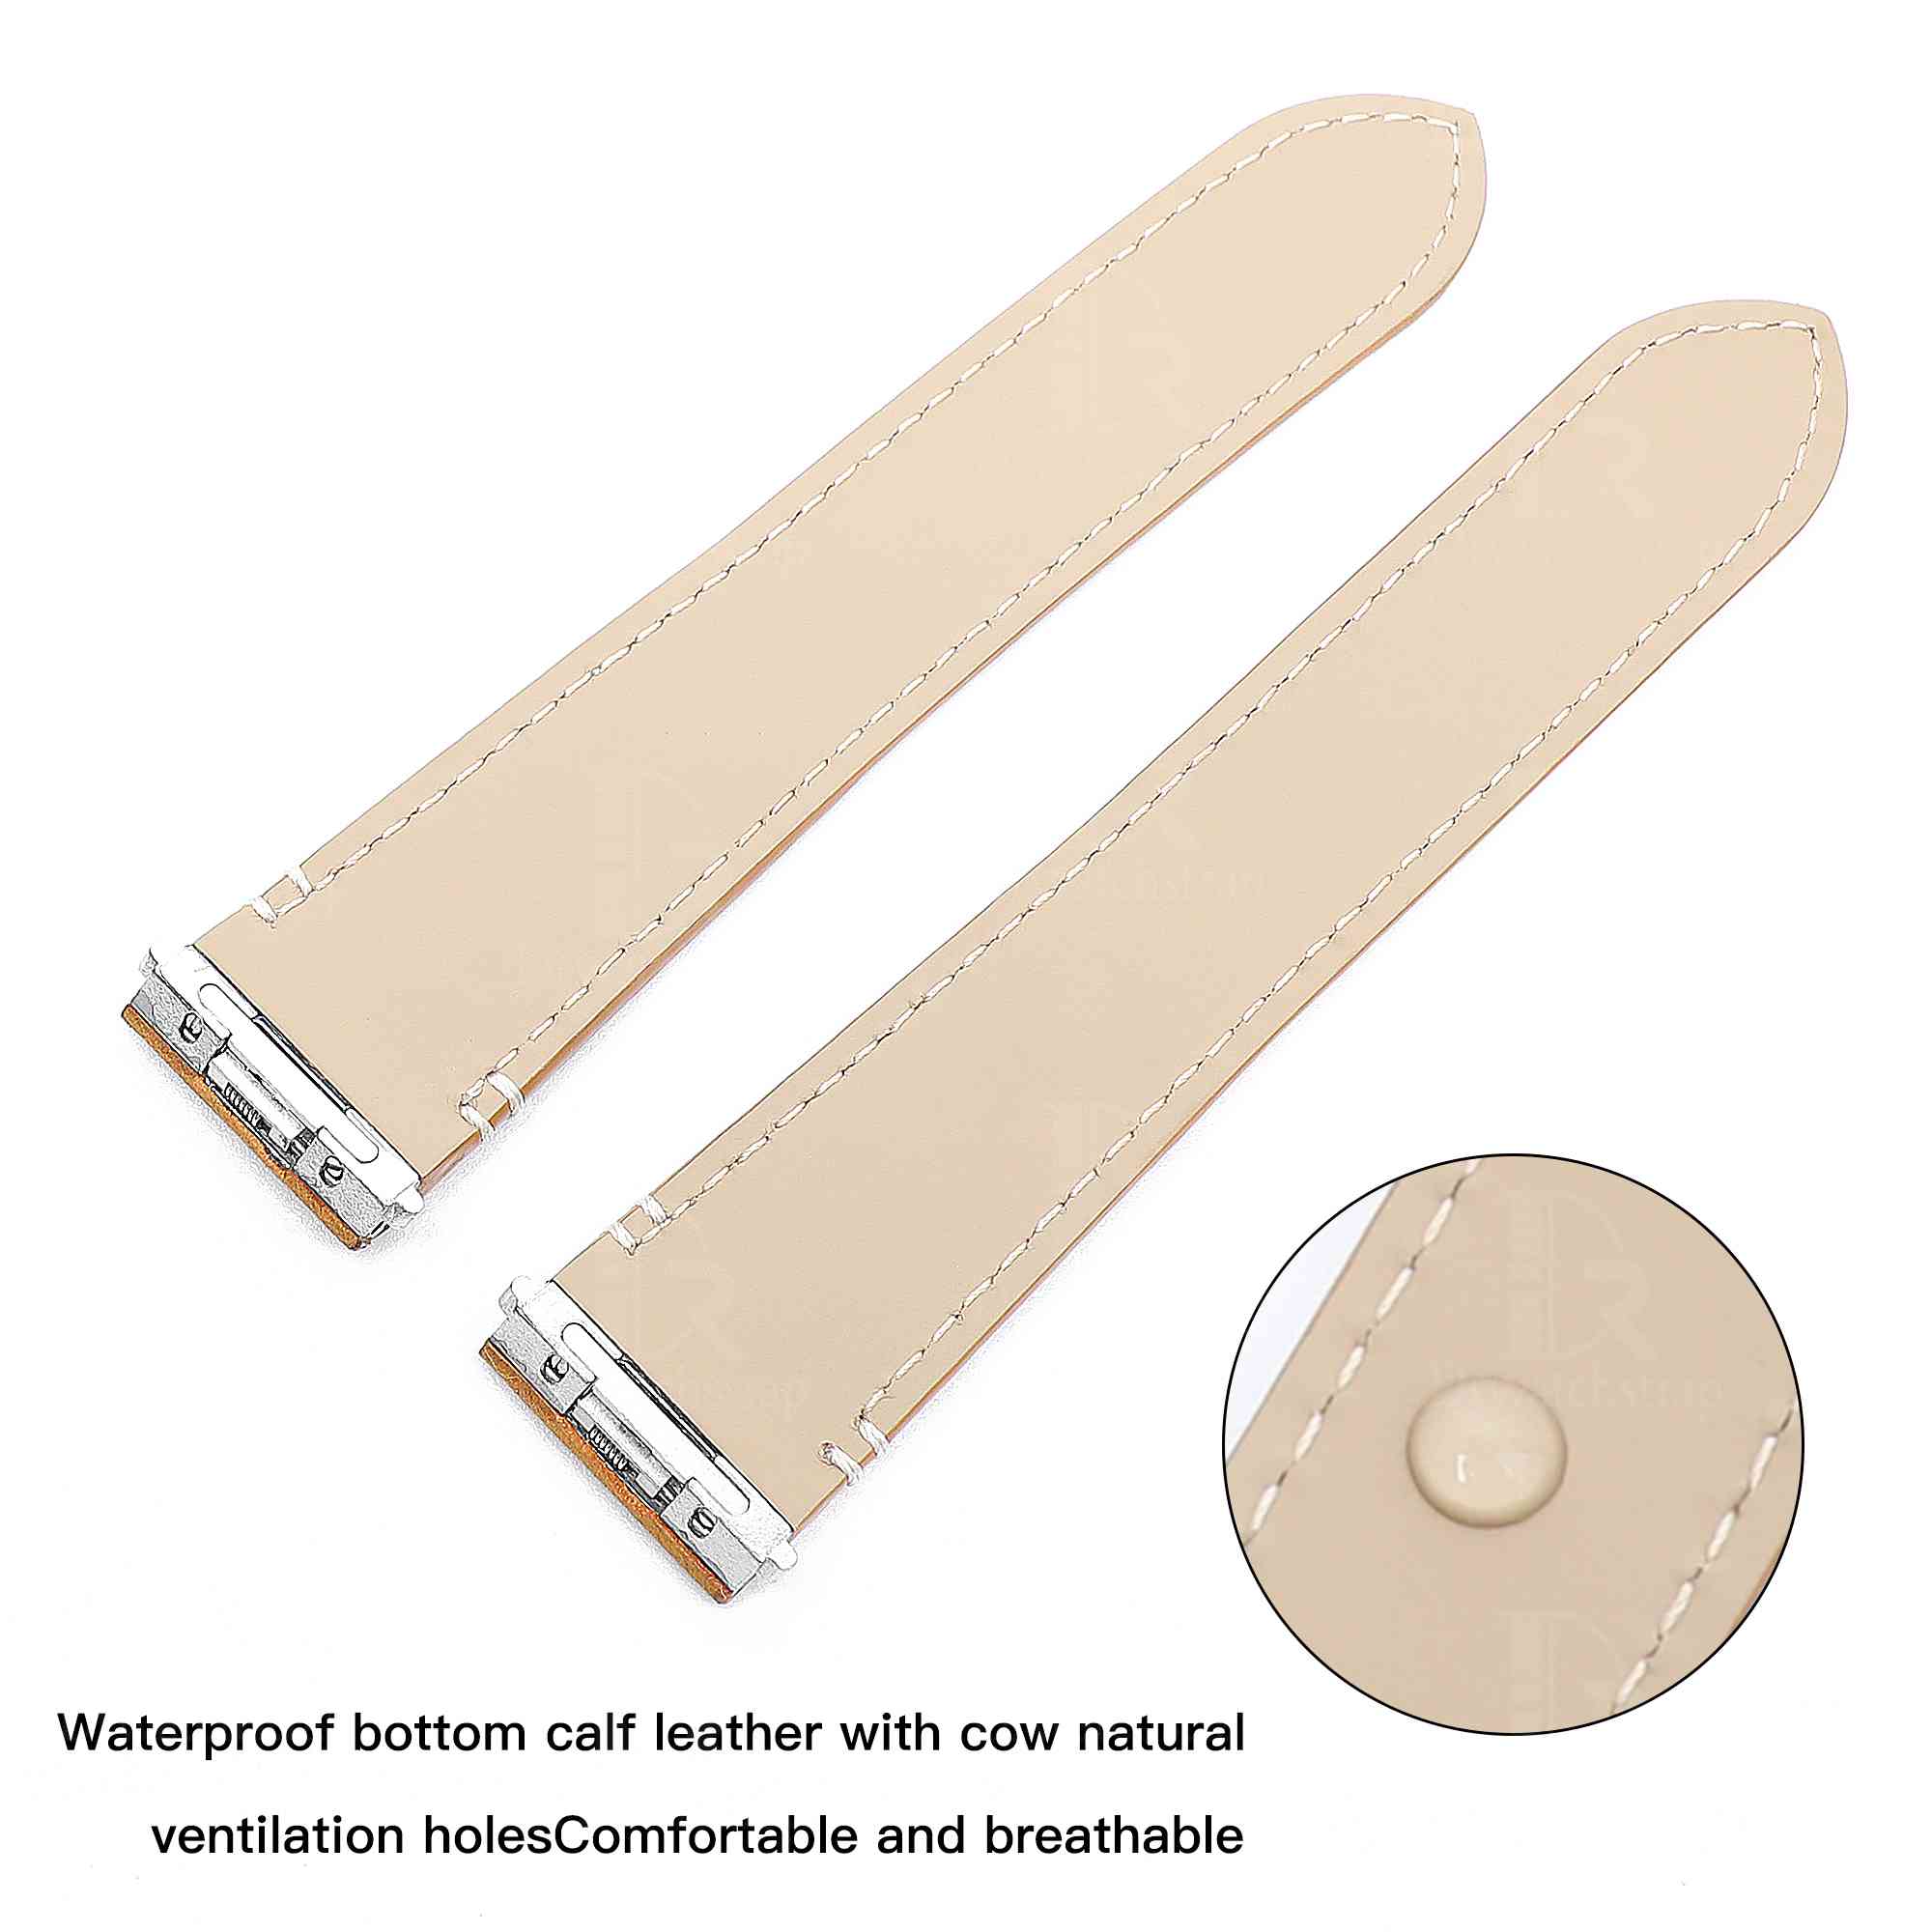 Cartier quick release watch strap waterproof bottom